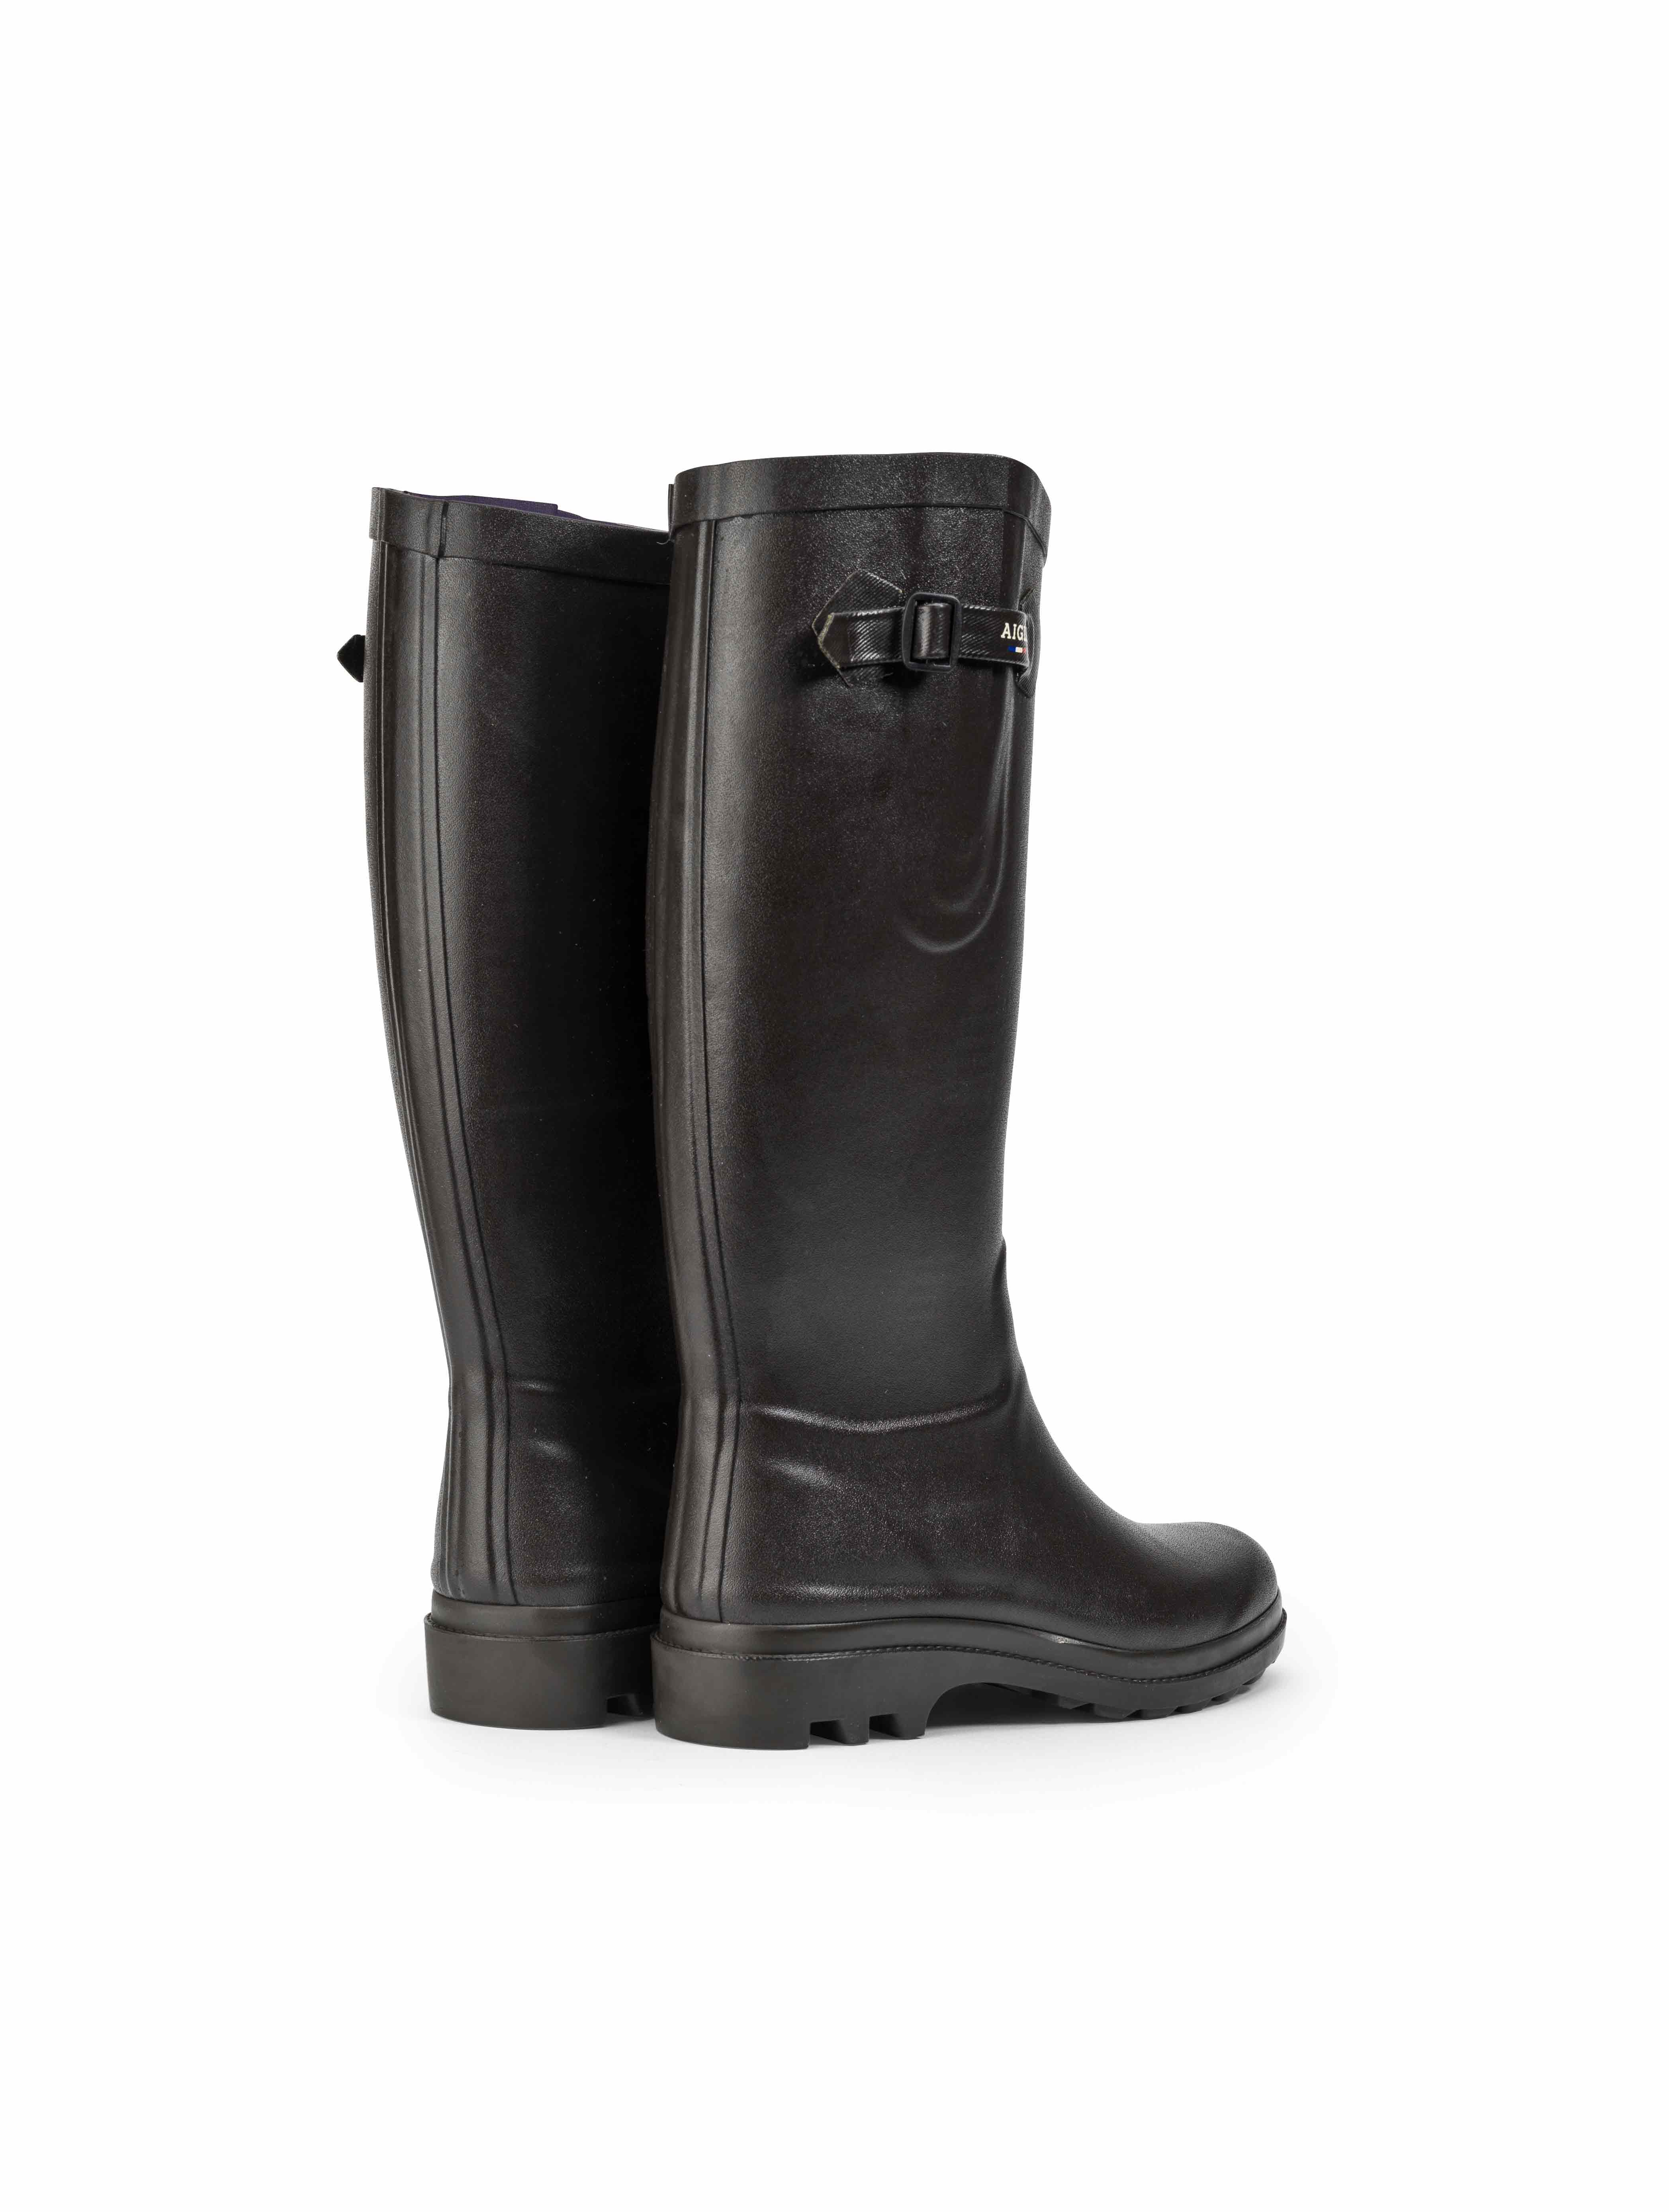 Aigle - Women's grip-sole boots Noir - Aiglentine®women | AIGLE